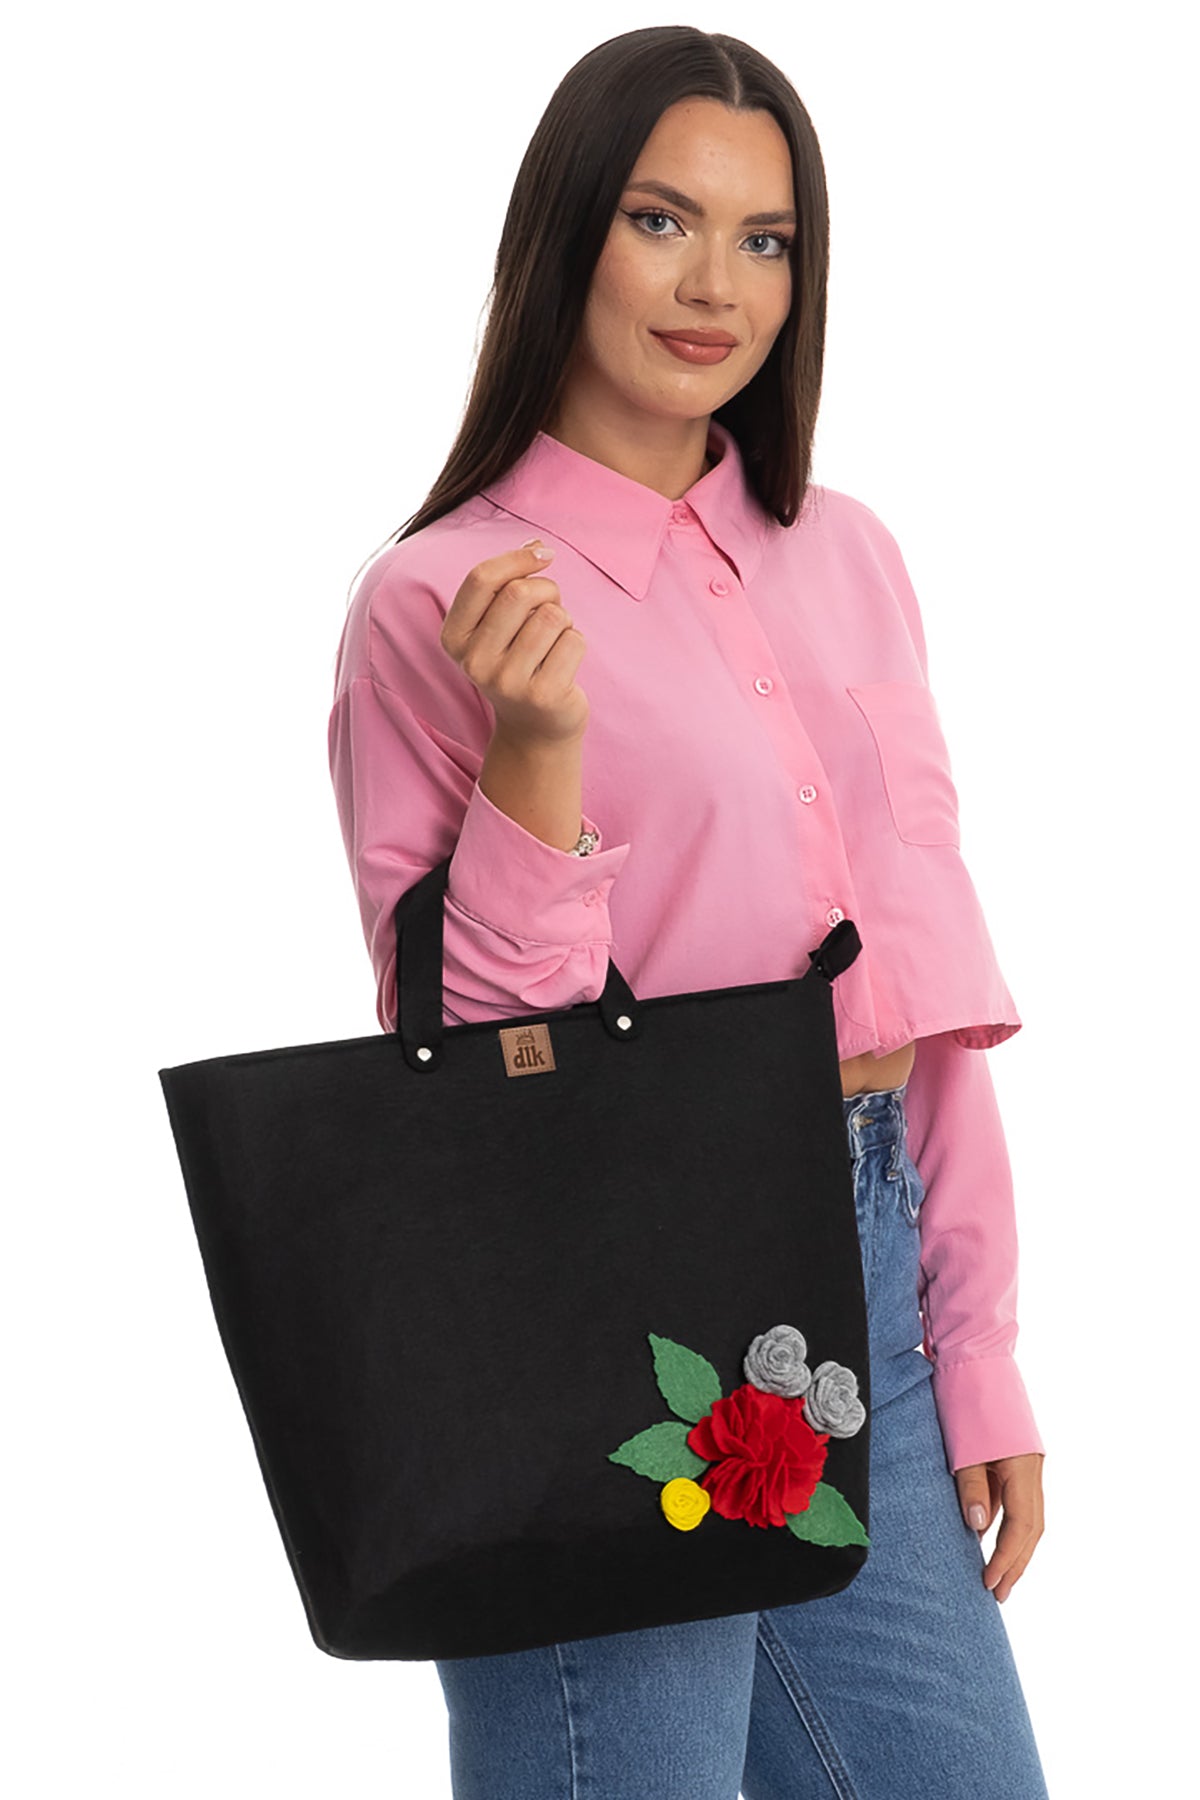 Handmade Large Size Felt Handbag -Red Carnation -40x35cm